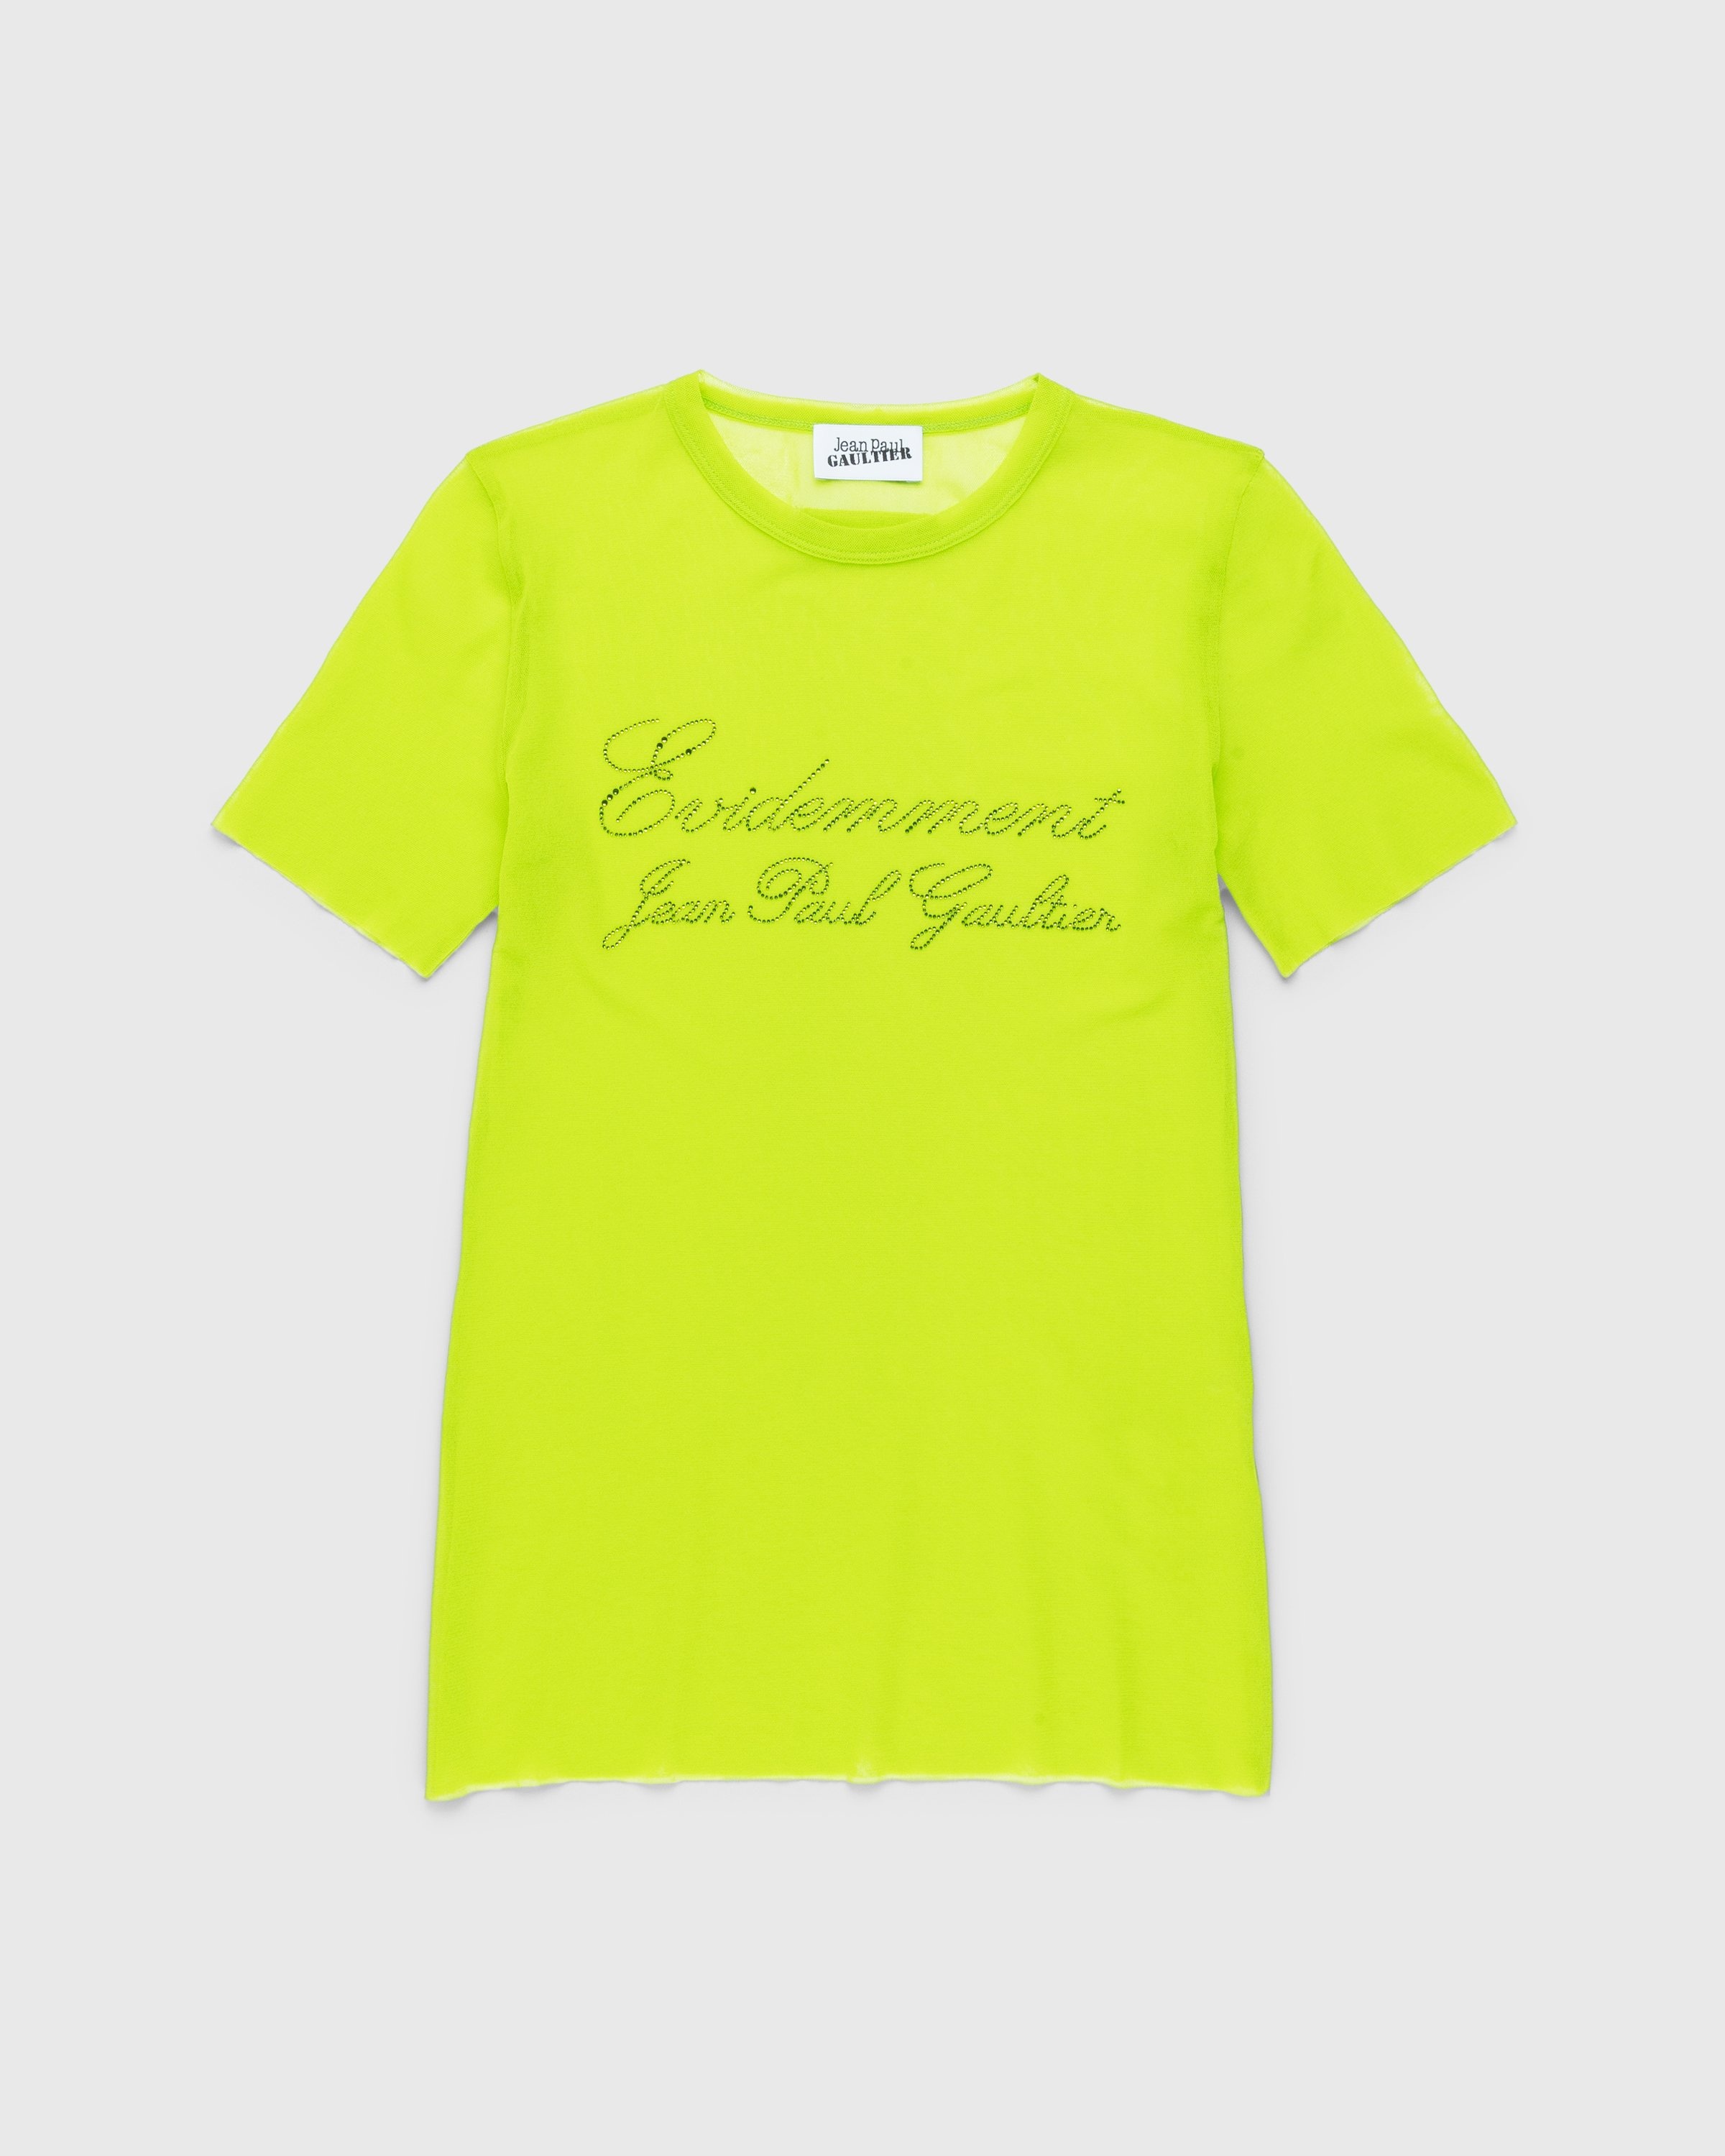 Jean Paul Gaultier – Évidemment Tulle T-Shirt Lime Green - T-Shirts - Green - Image 1